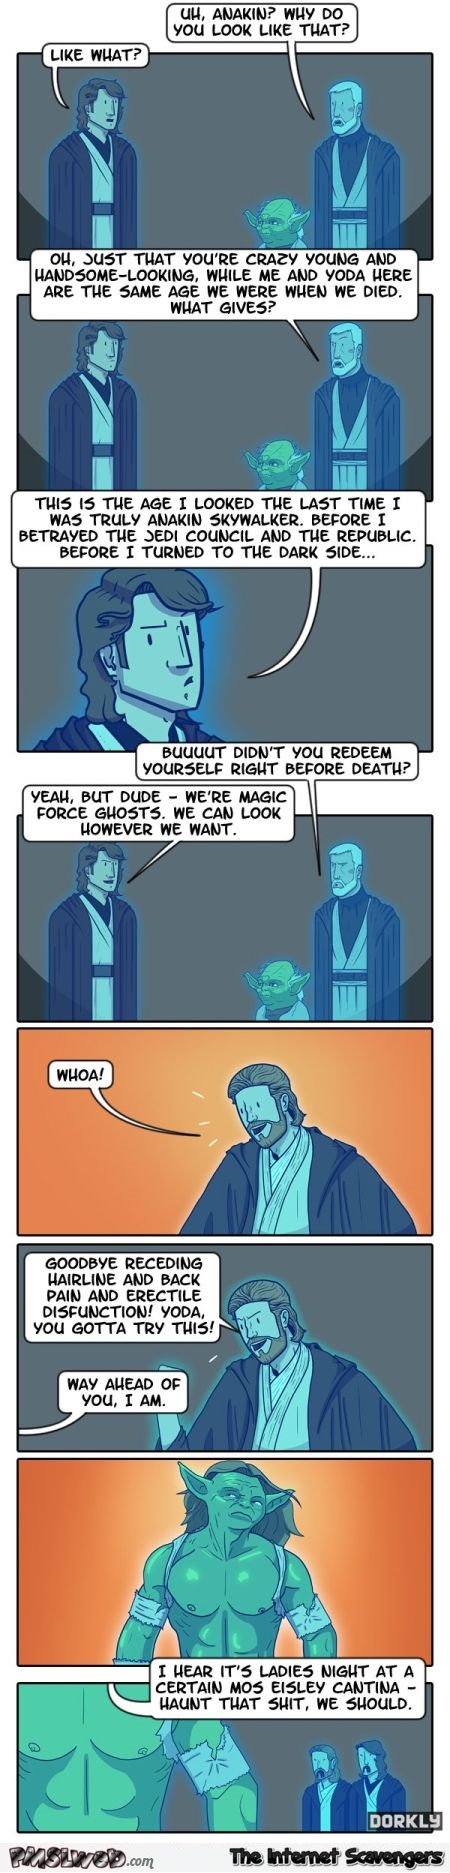 Yoda rejuvenates funny cartoon @PMSLweb.com